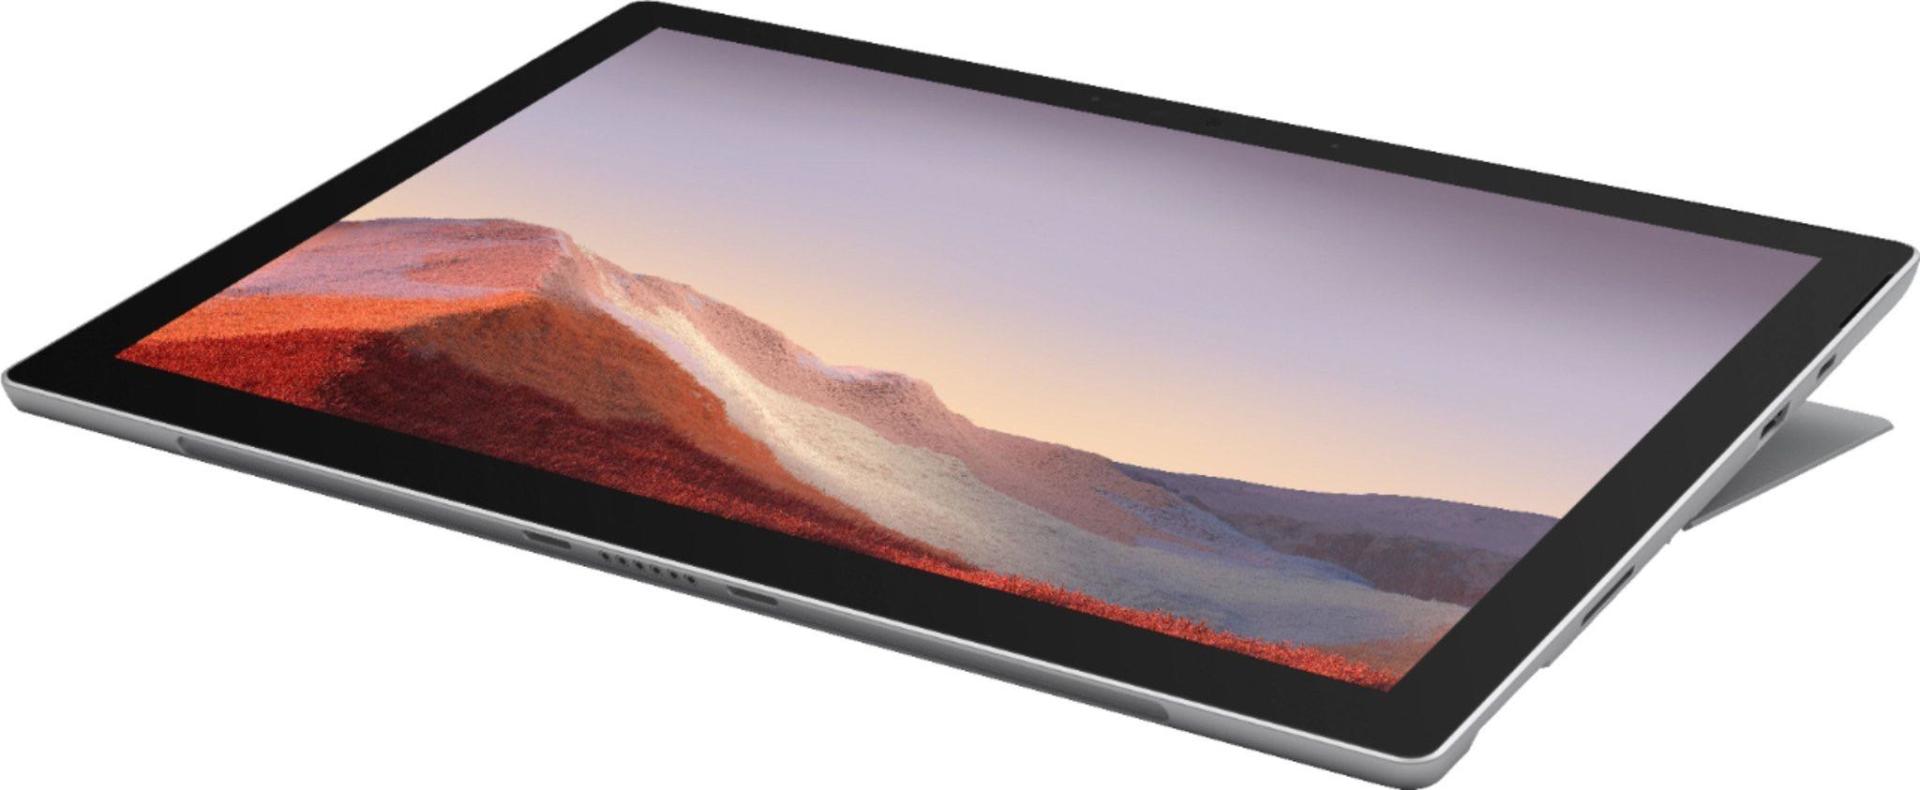 مرجع متخصصين ايران مايكروسافت سرفيس پرو 7 / Microsoft Surface Pro 7